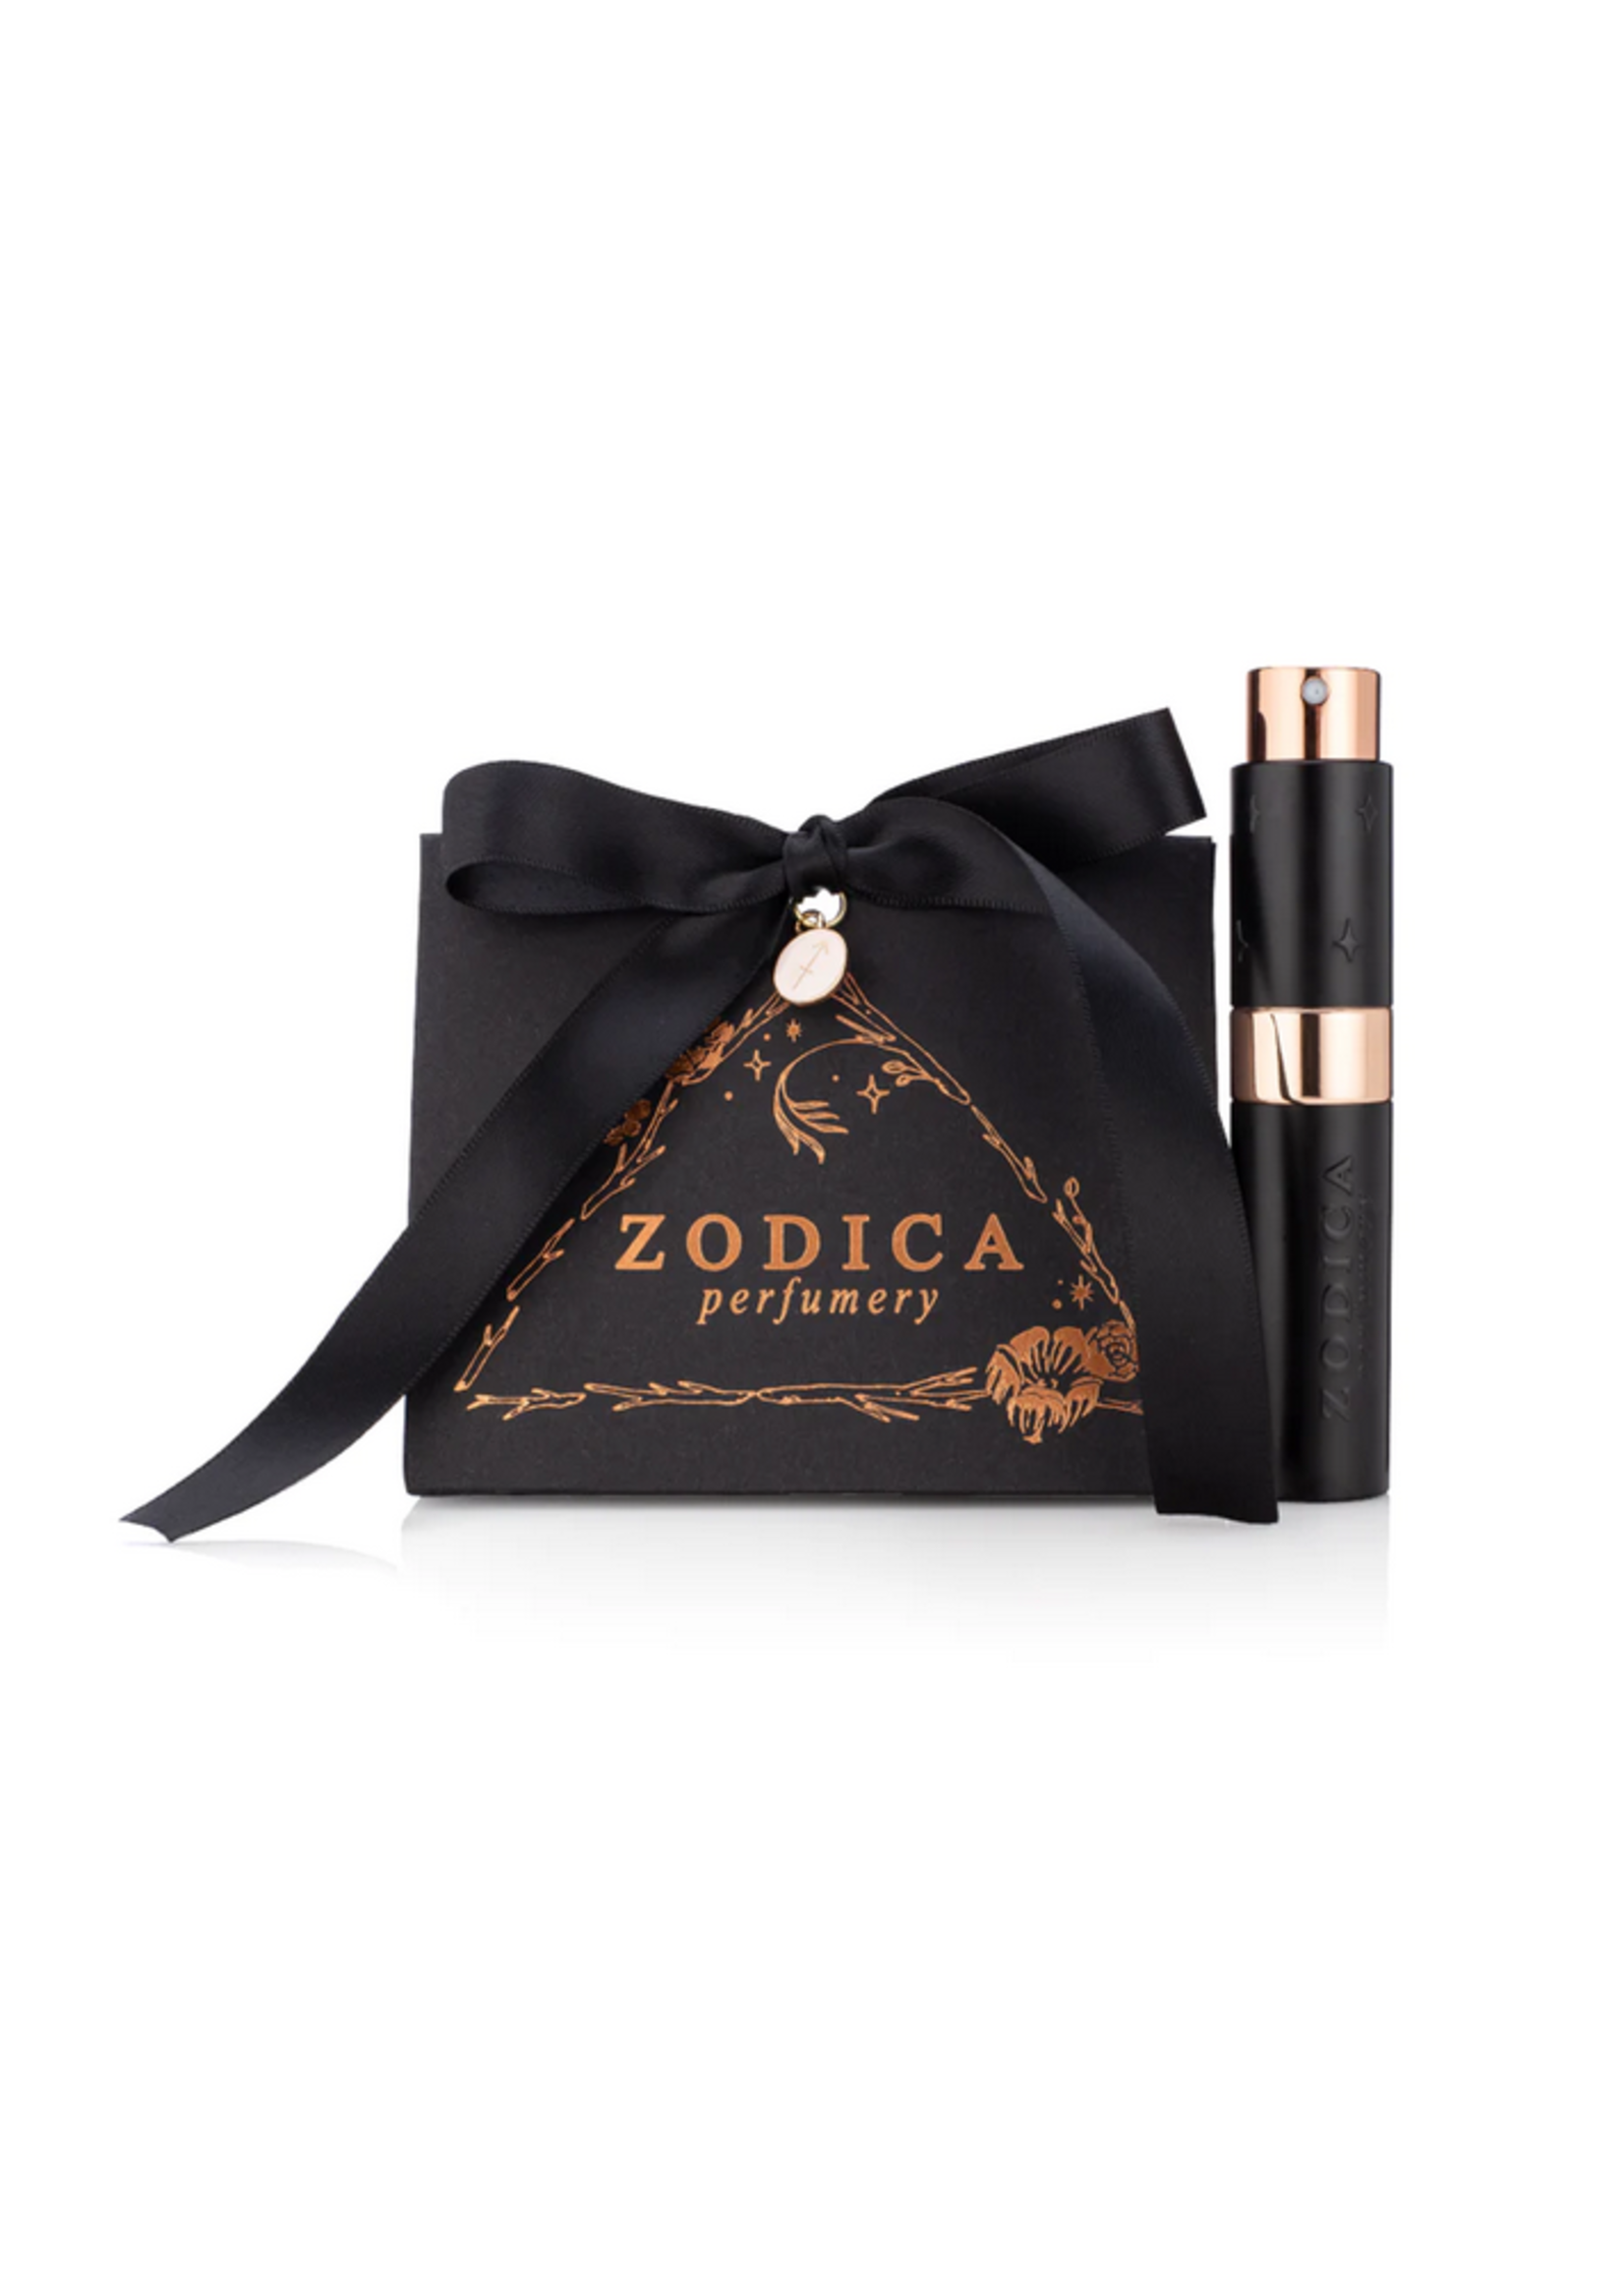 Zodica Perfume Twist & Spritz Travel Spray Gift Cancer